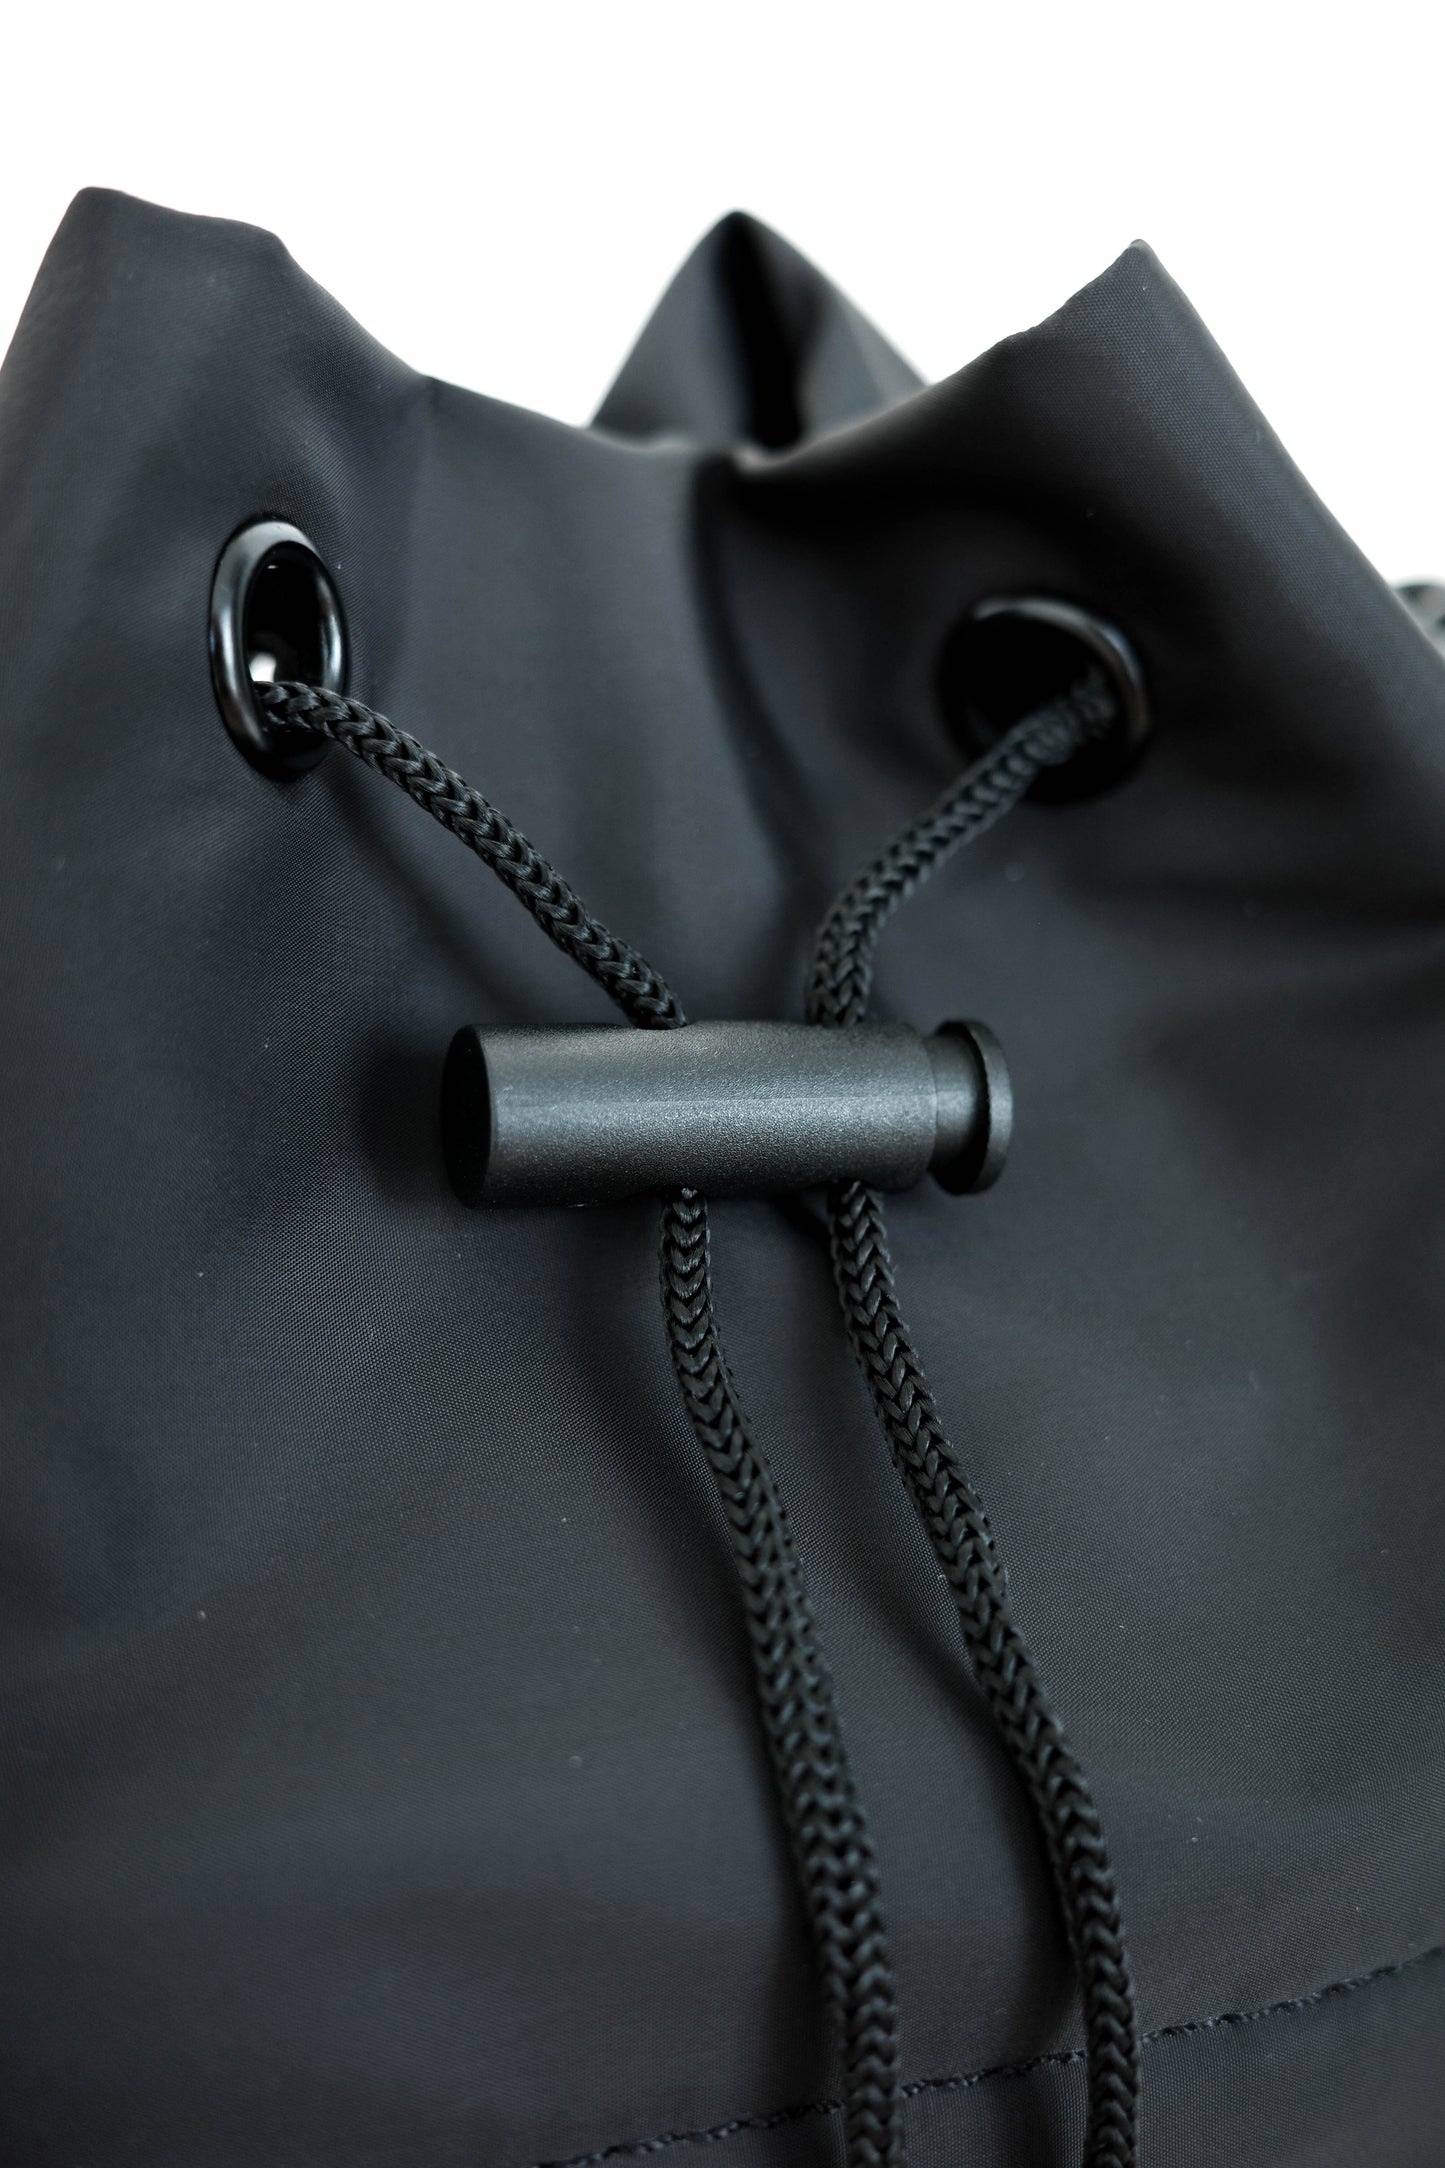 Japanese nylon bucket shoulder bag classic black